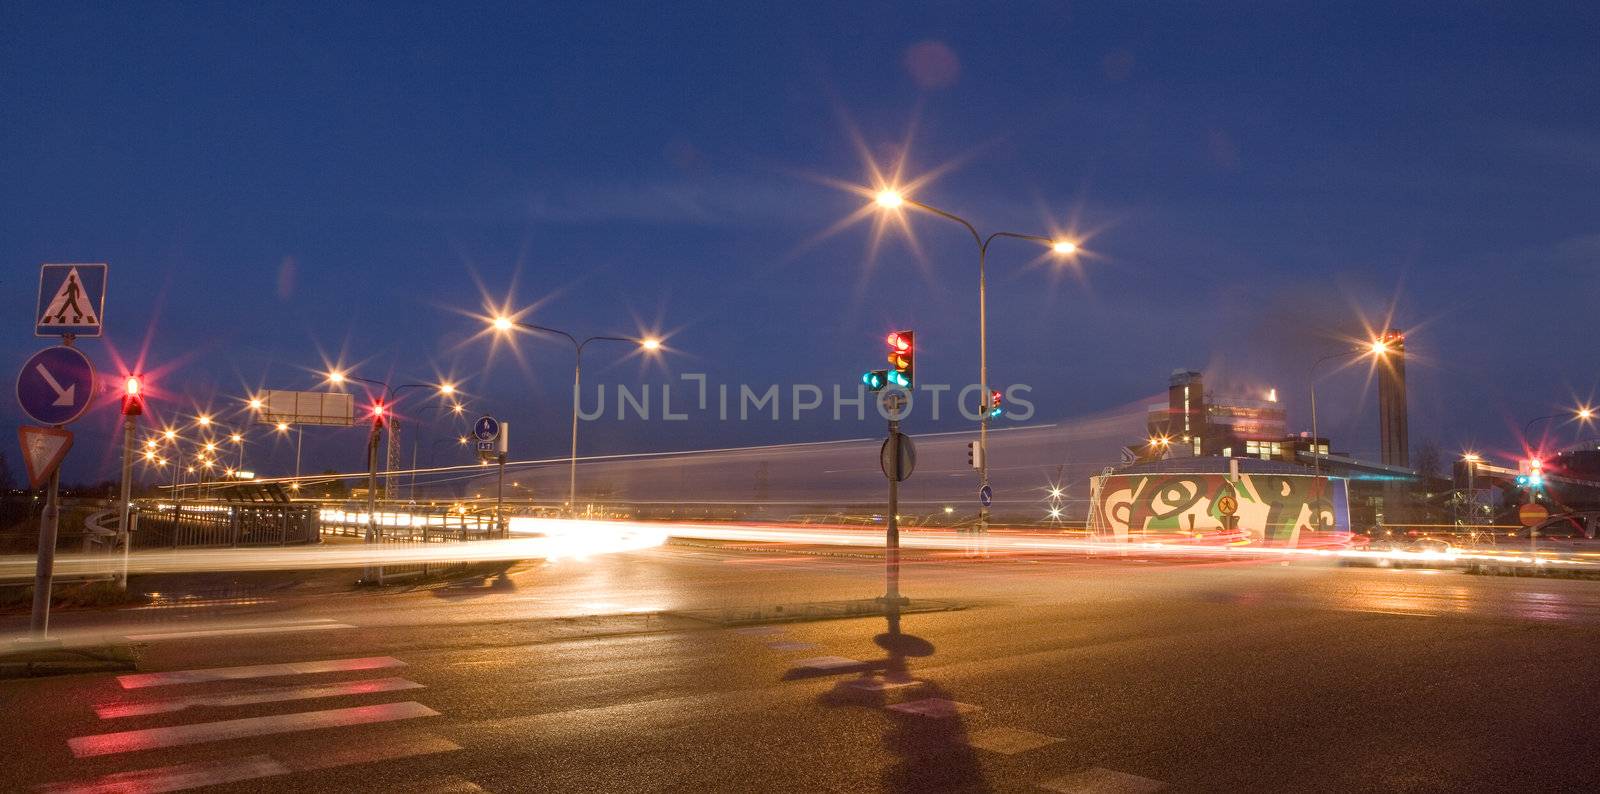 Stoplights at night by gemenacom